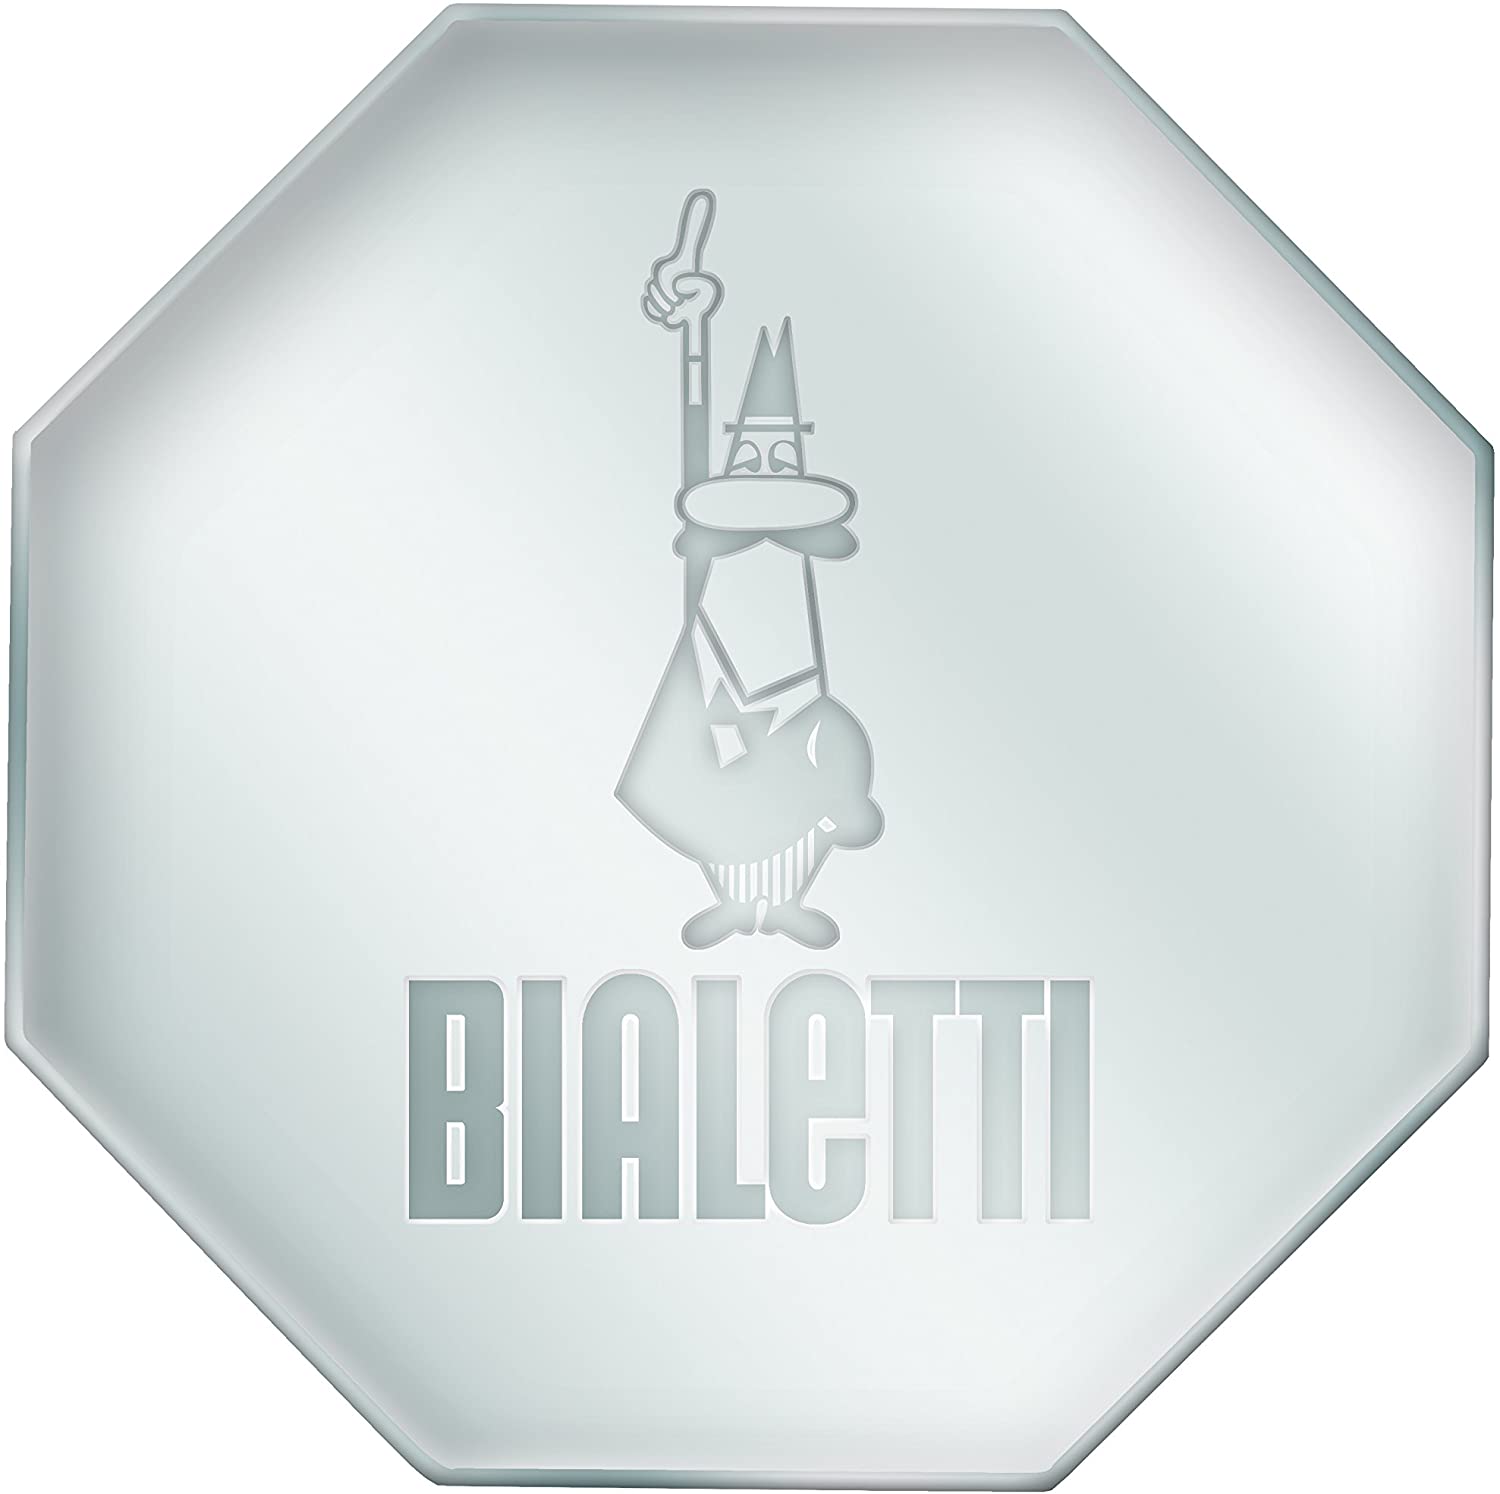 Bialetti 9018 10 x 10 x 0.3 cm Moka Holder Coffee Makers, Silver